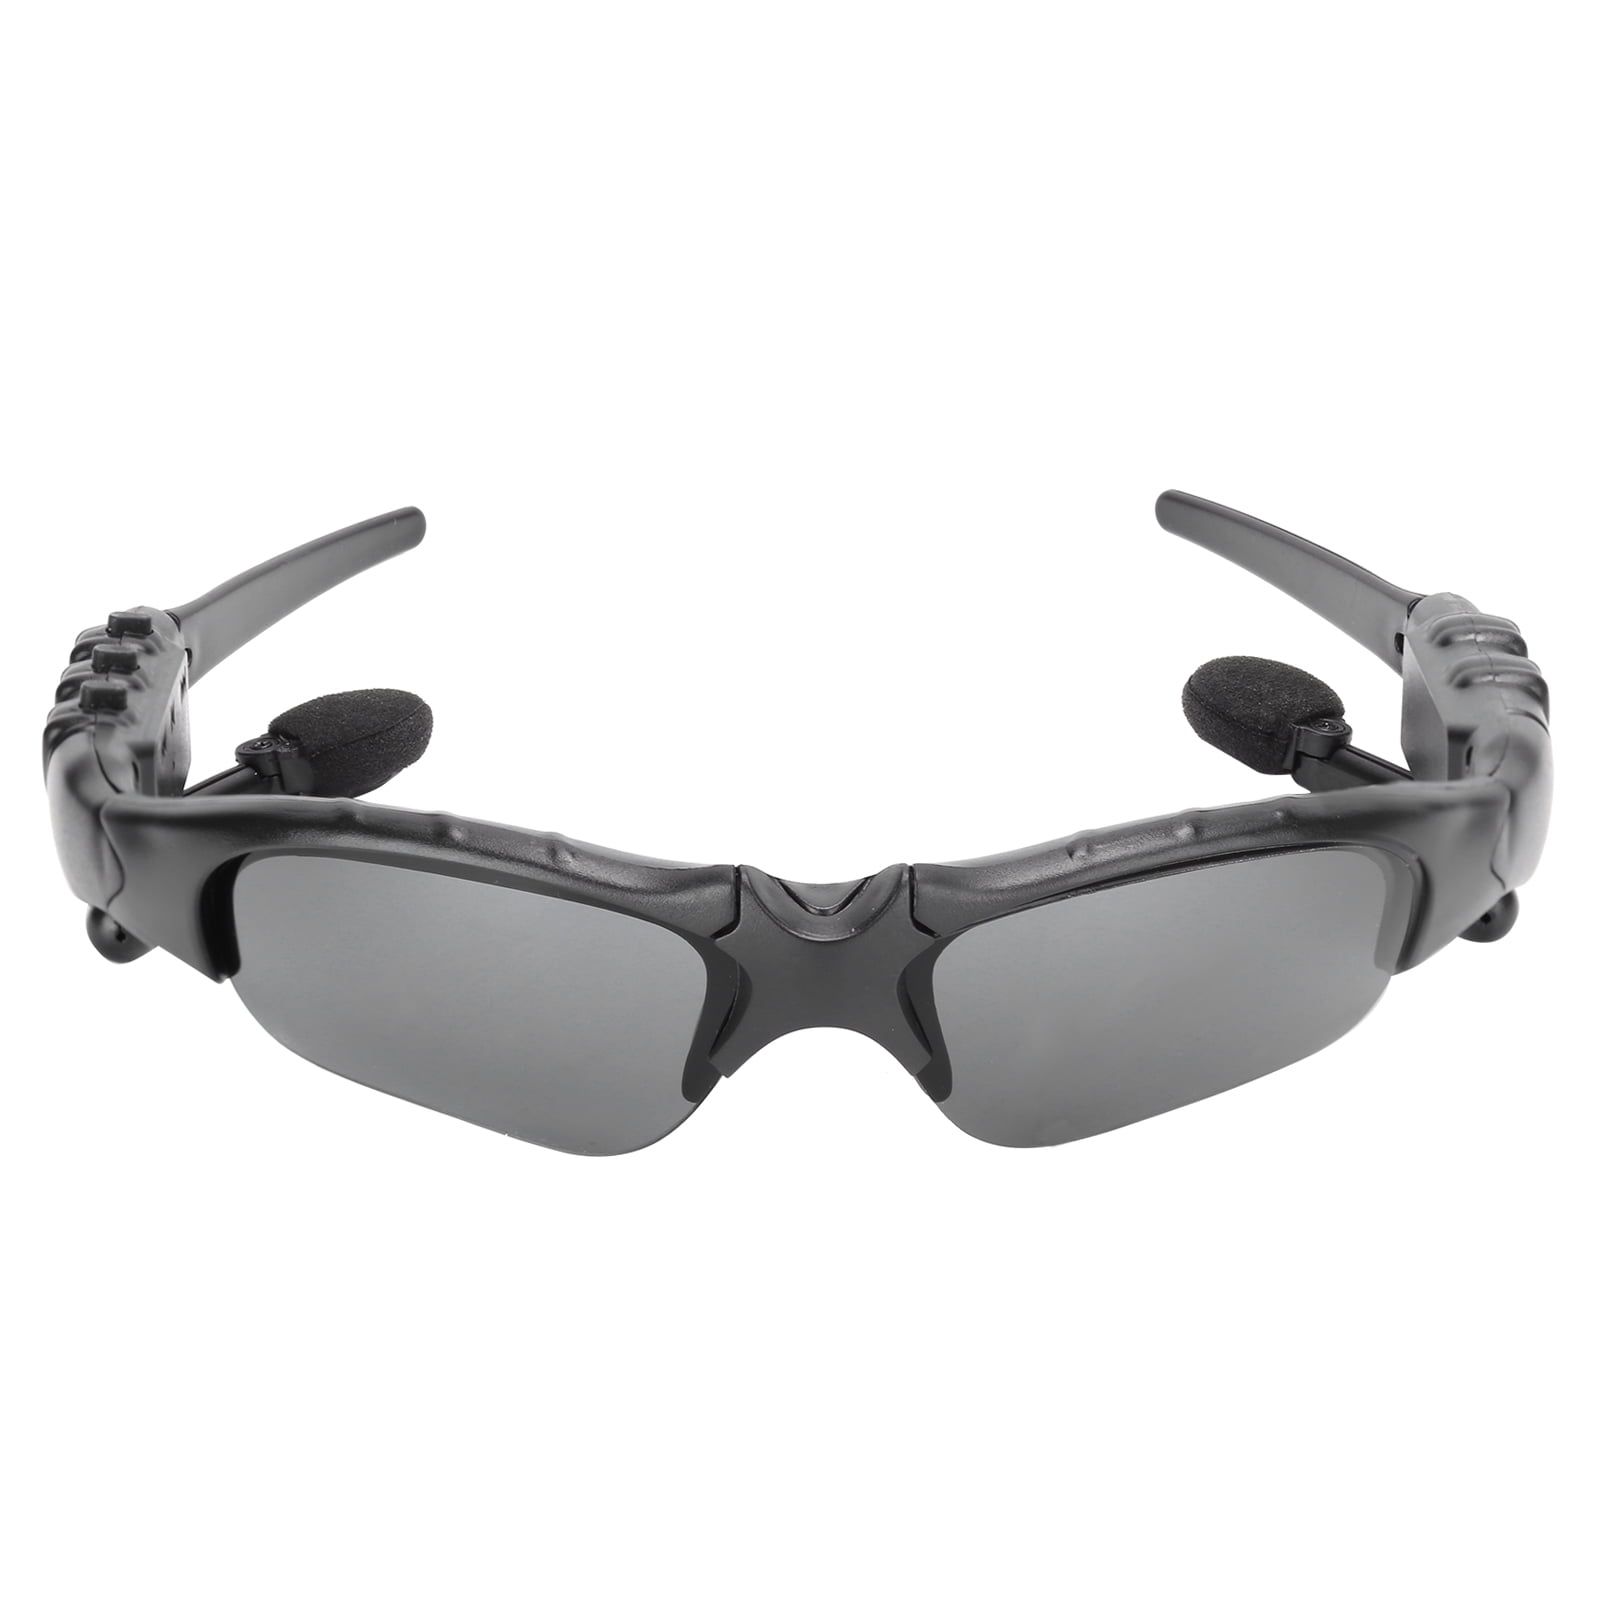 Docooler Active Shutter Glasses G06-BT 3D Virtual Reality Glasses Bluetooth Signal for 3D HDTV 